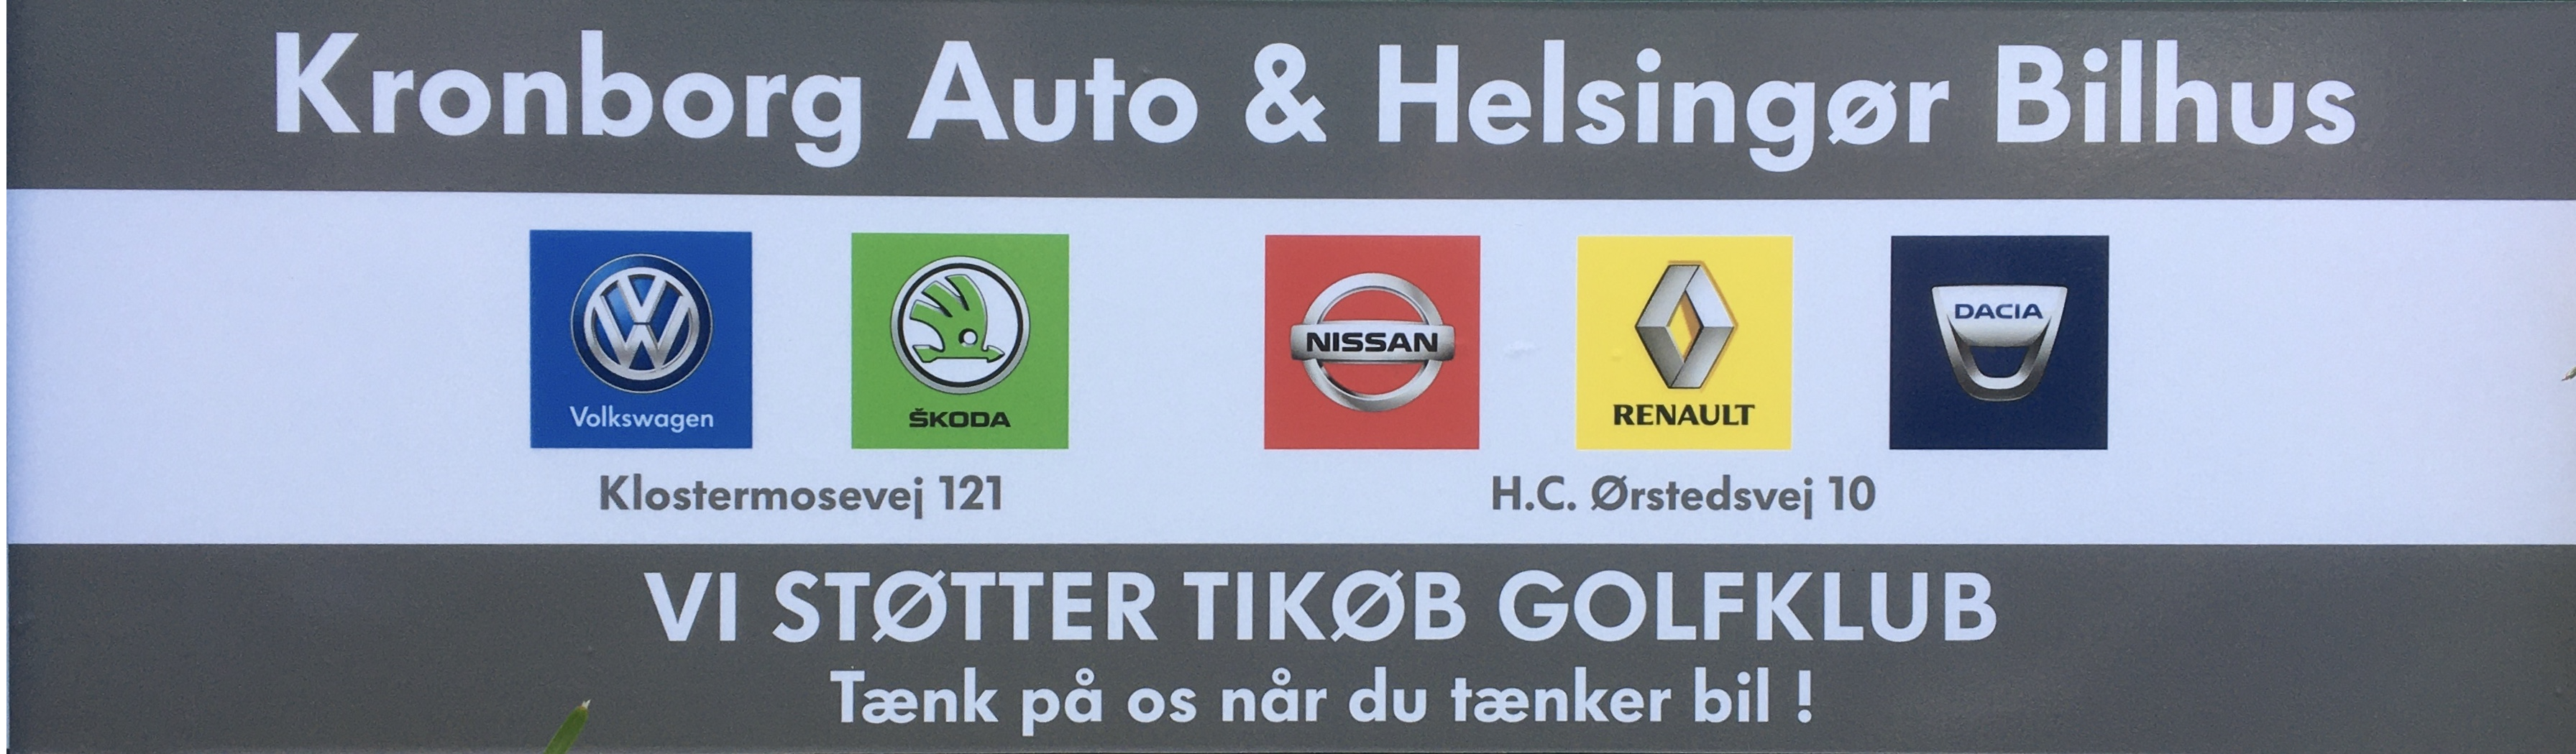 Kronborg Auto & Helsingør Bilhus